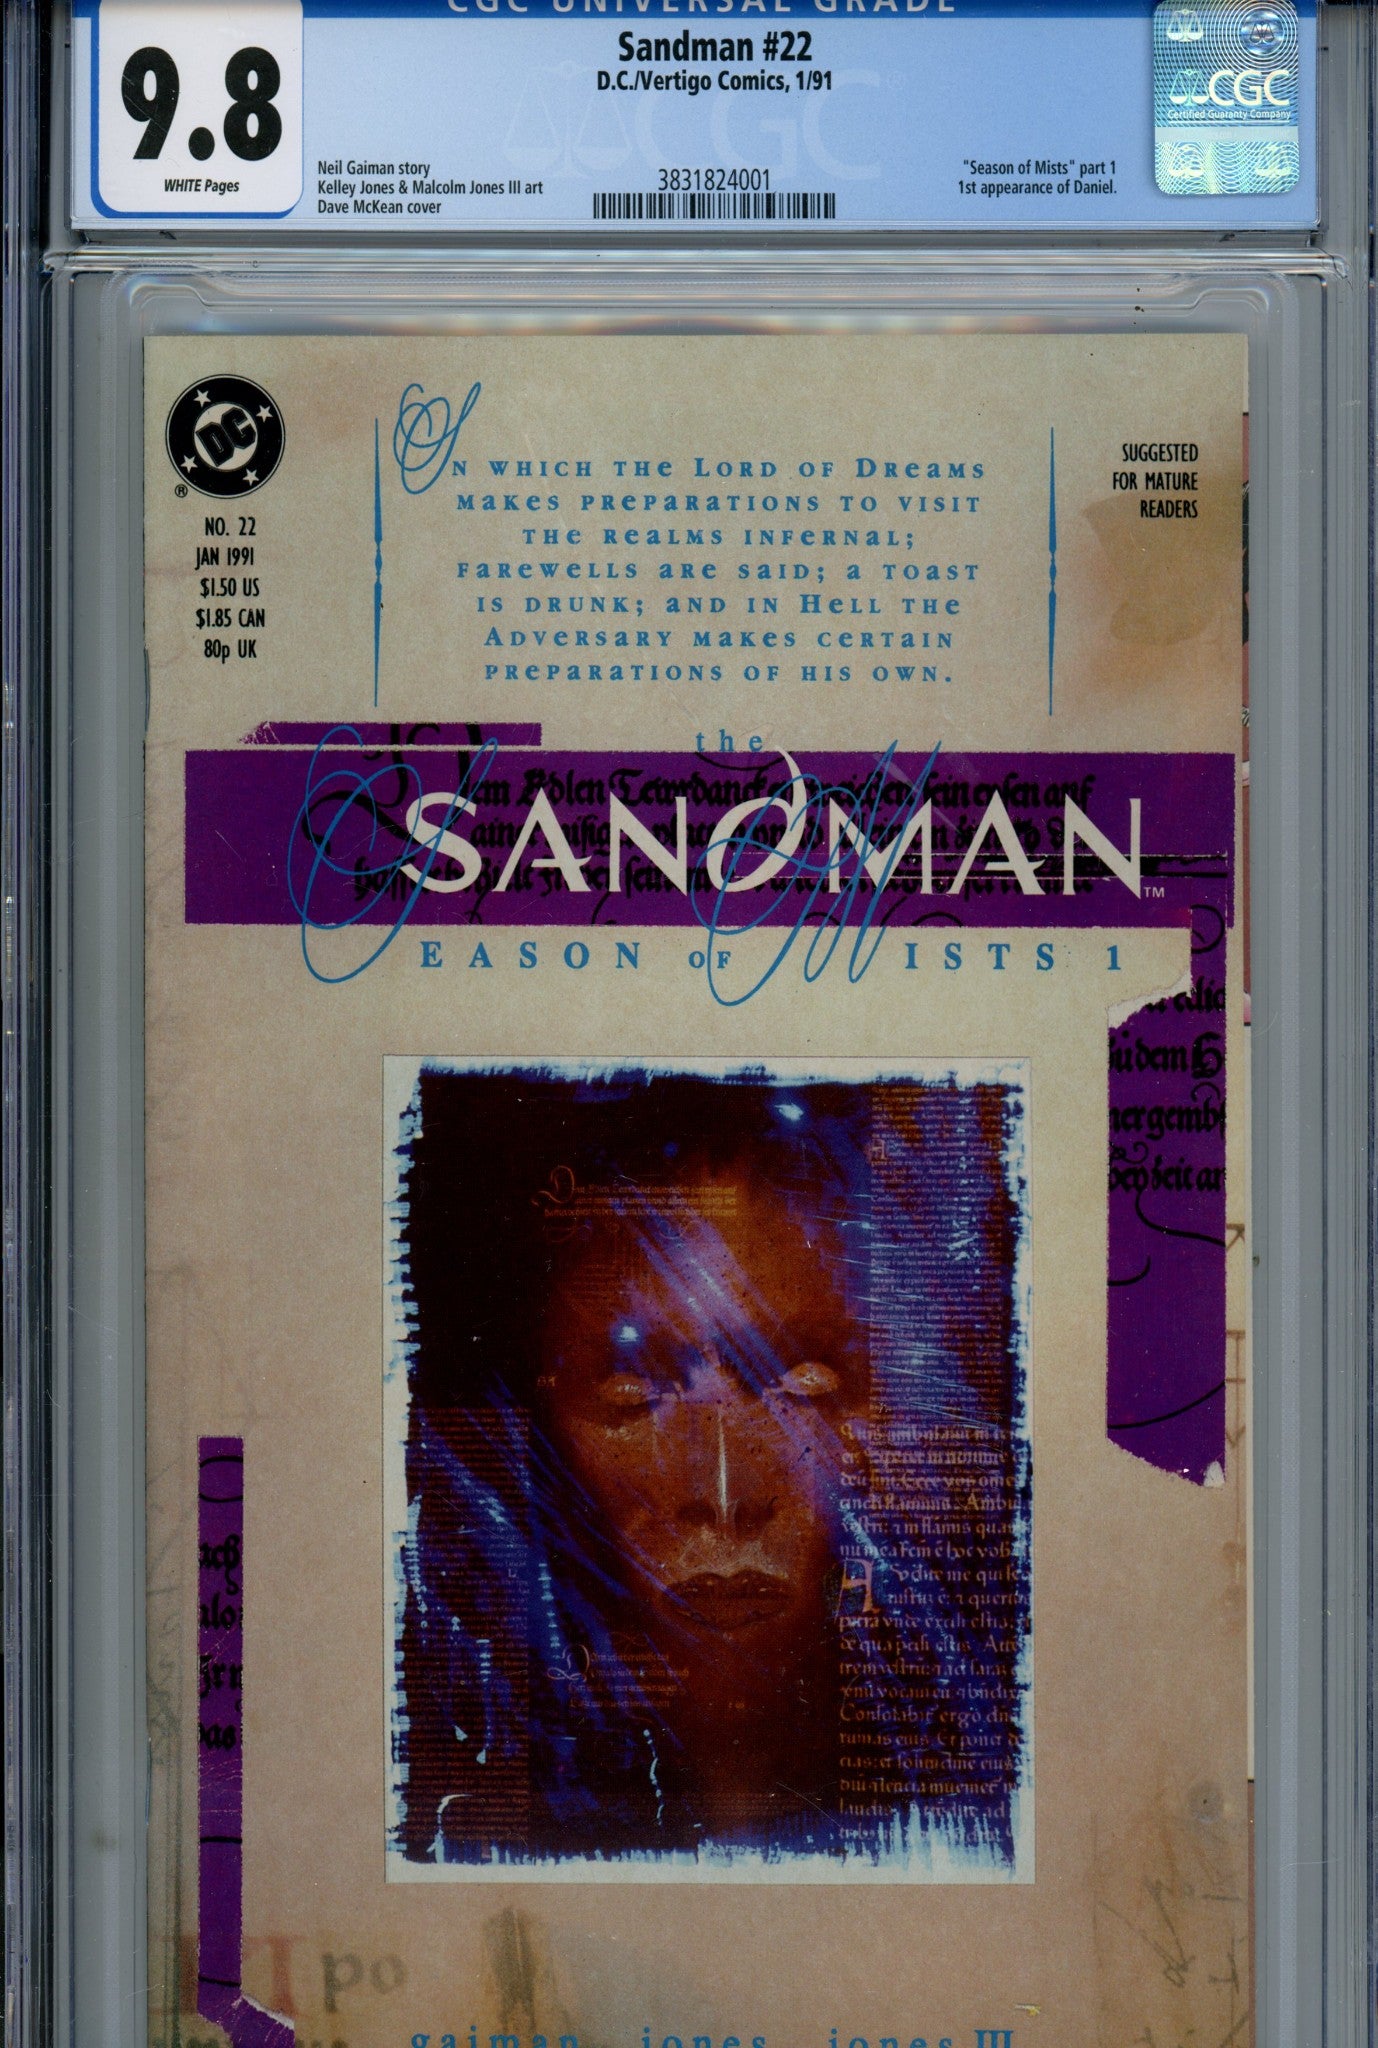 Sandman Vol 2 22 CGC 9.8 (NM/M) (1991) 